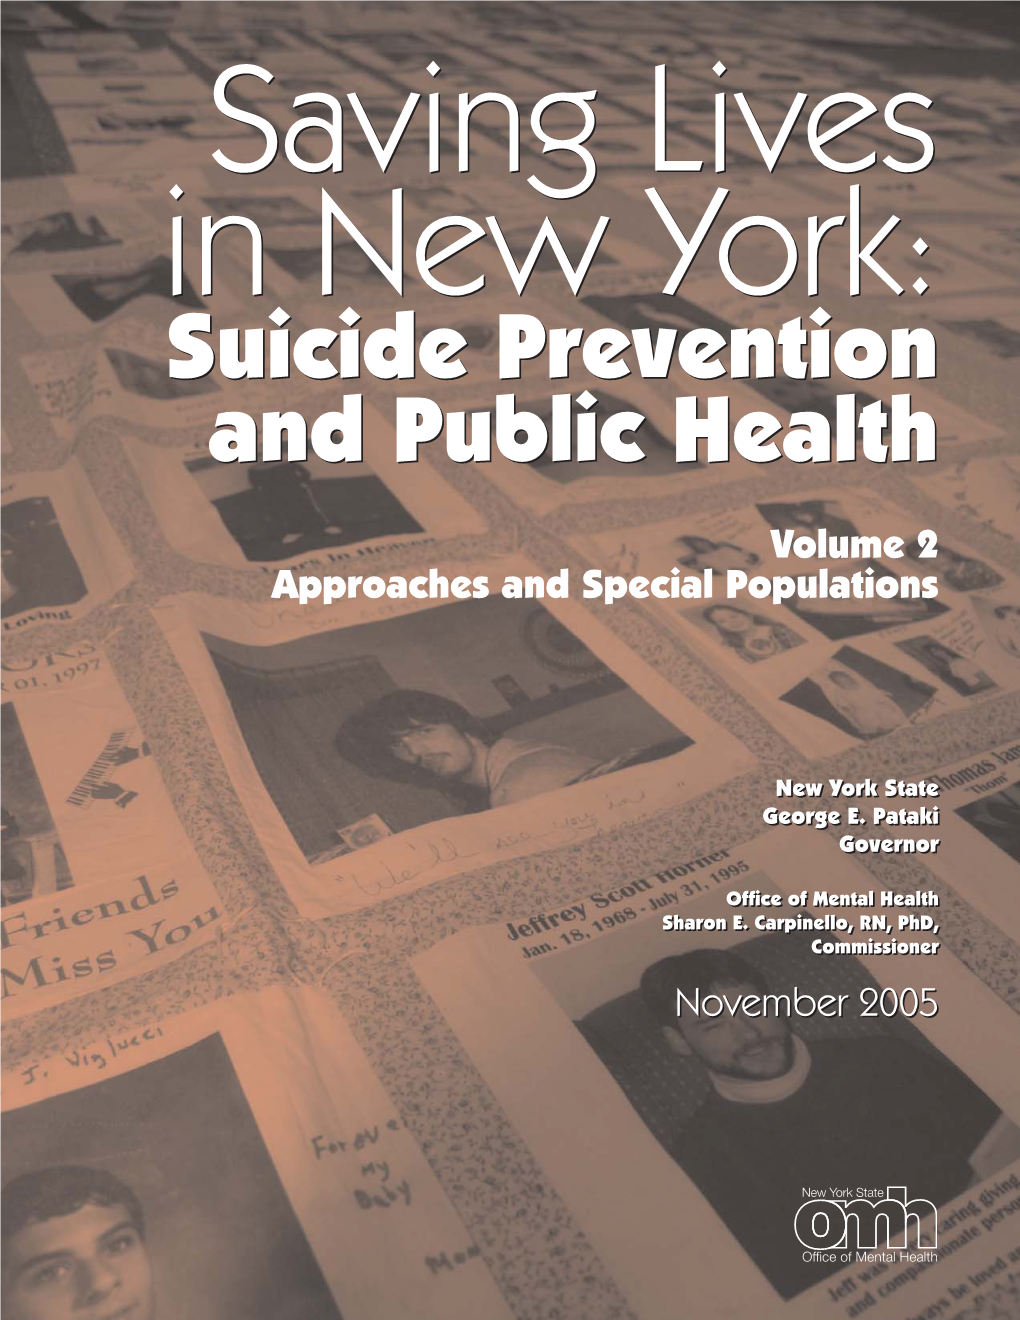 Suicide Prevention and Public Health